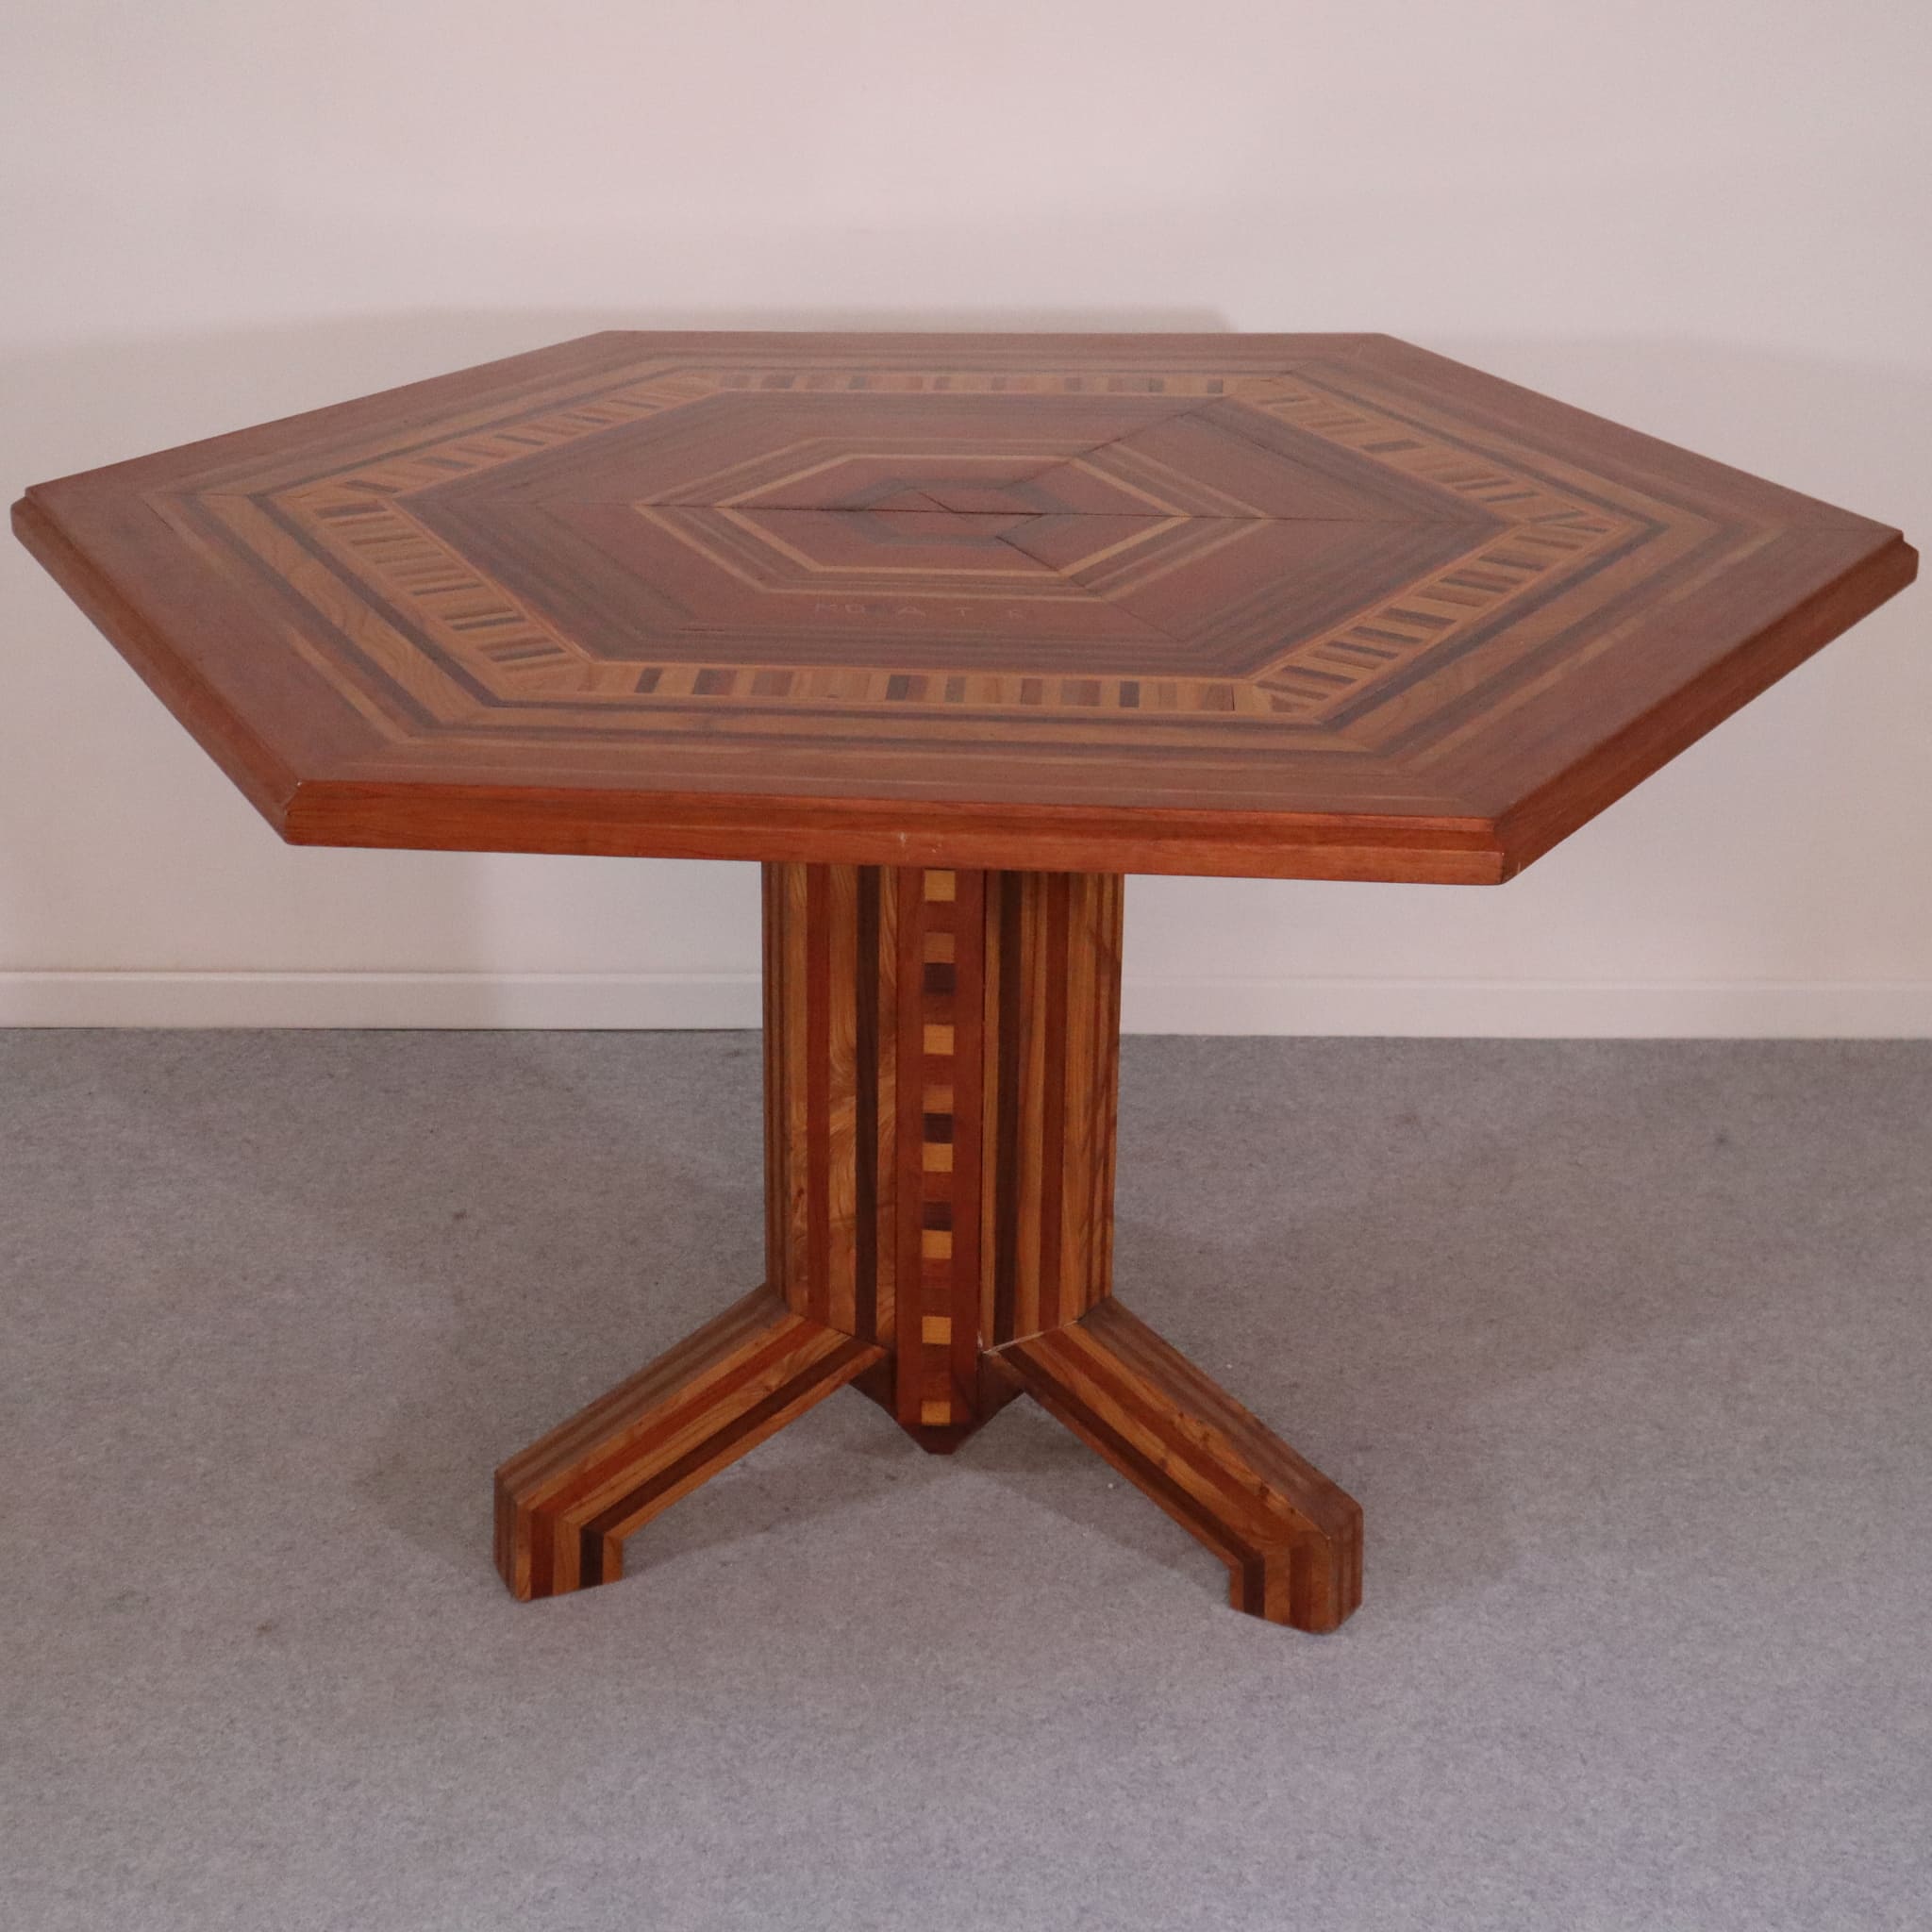 visionidepoca-visioni-depoca-table-wood-unique-monasteri-octagonal-70s-furniture-made-italy-modern-vintage-design-antiques-1